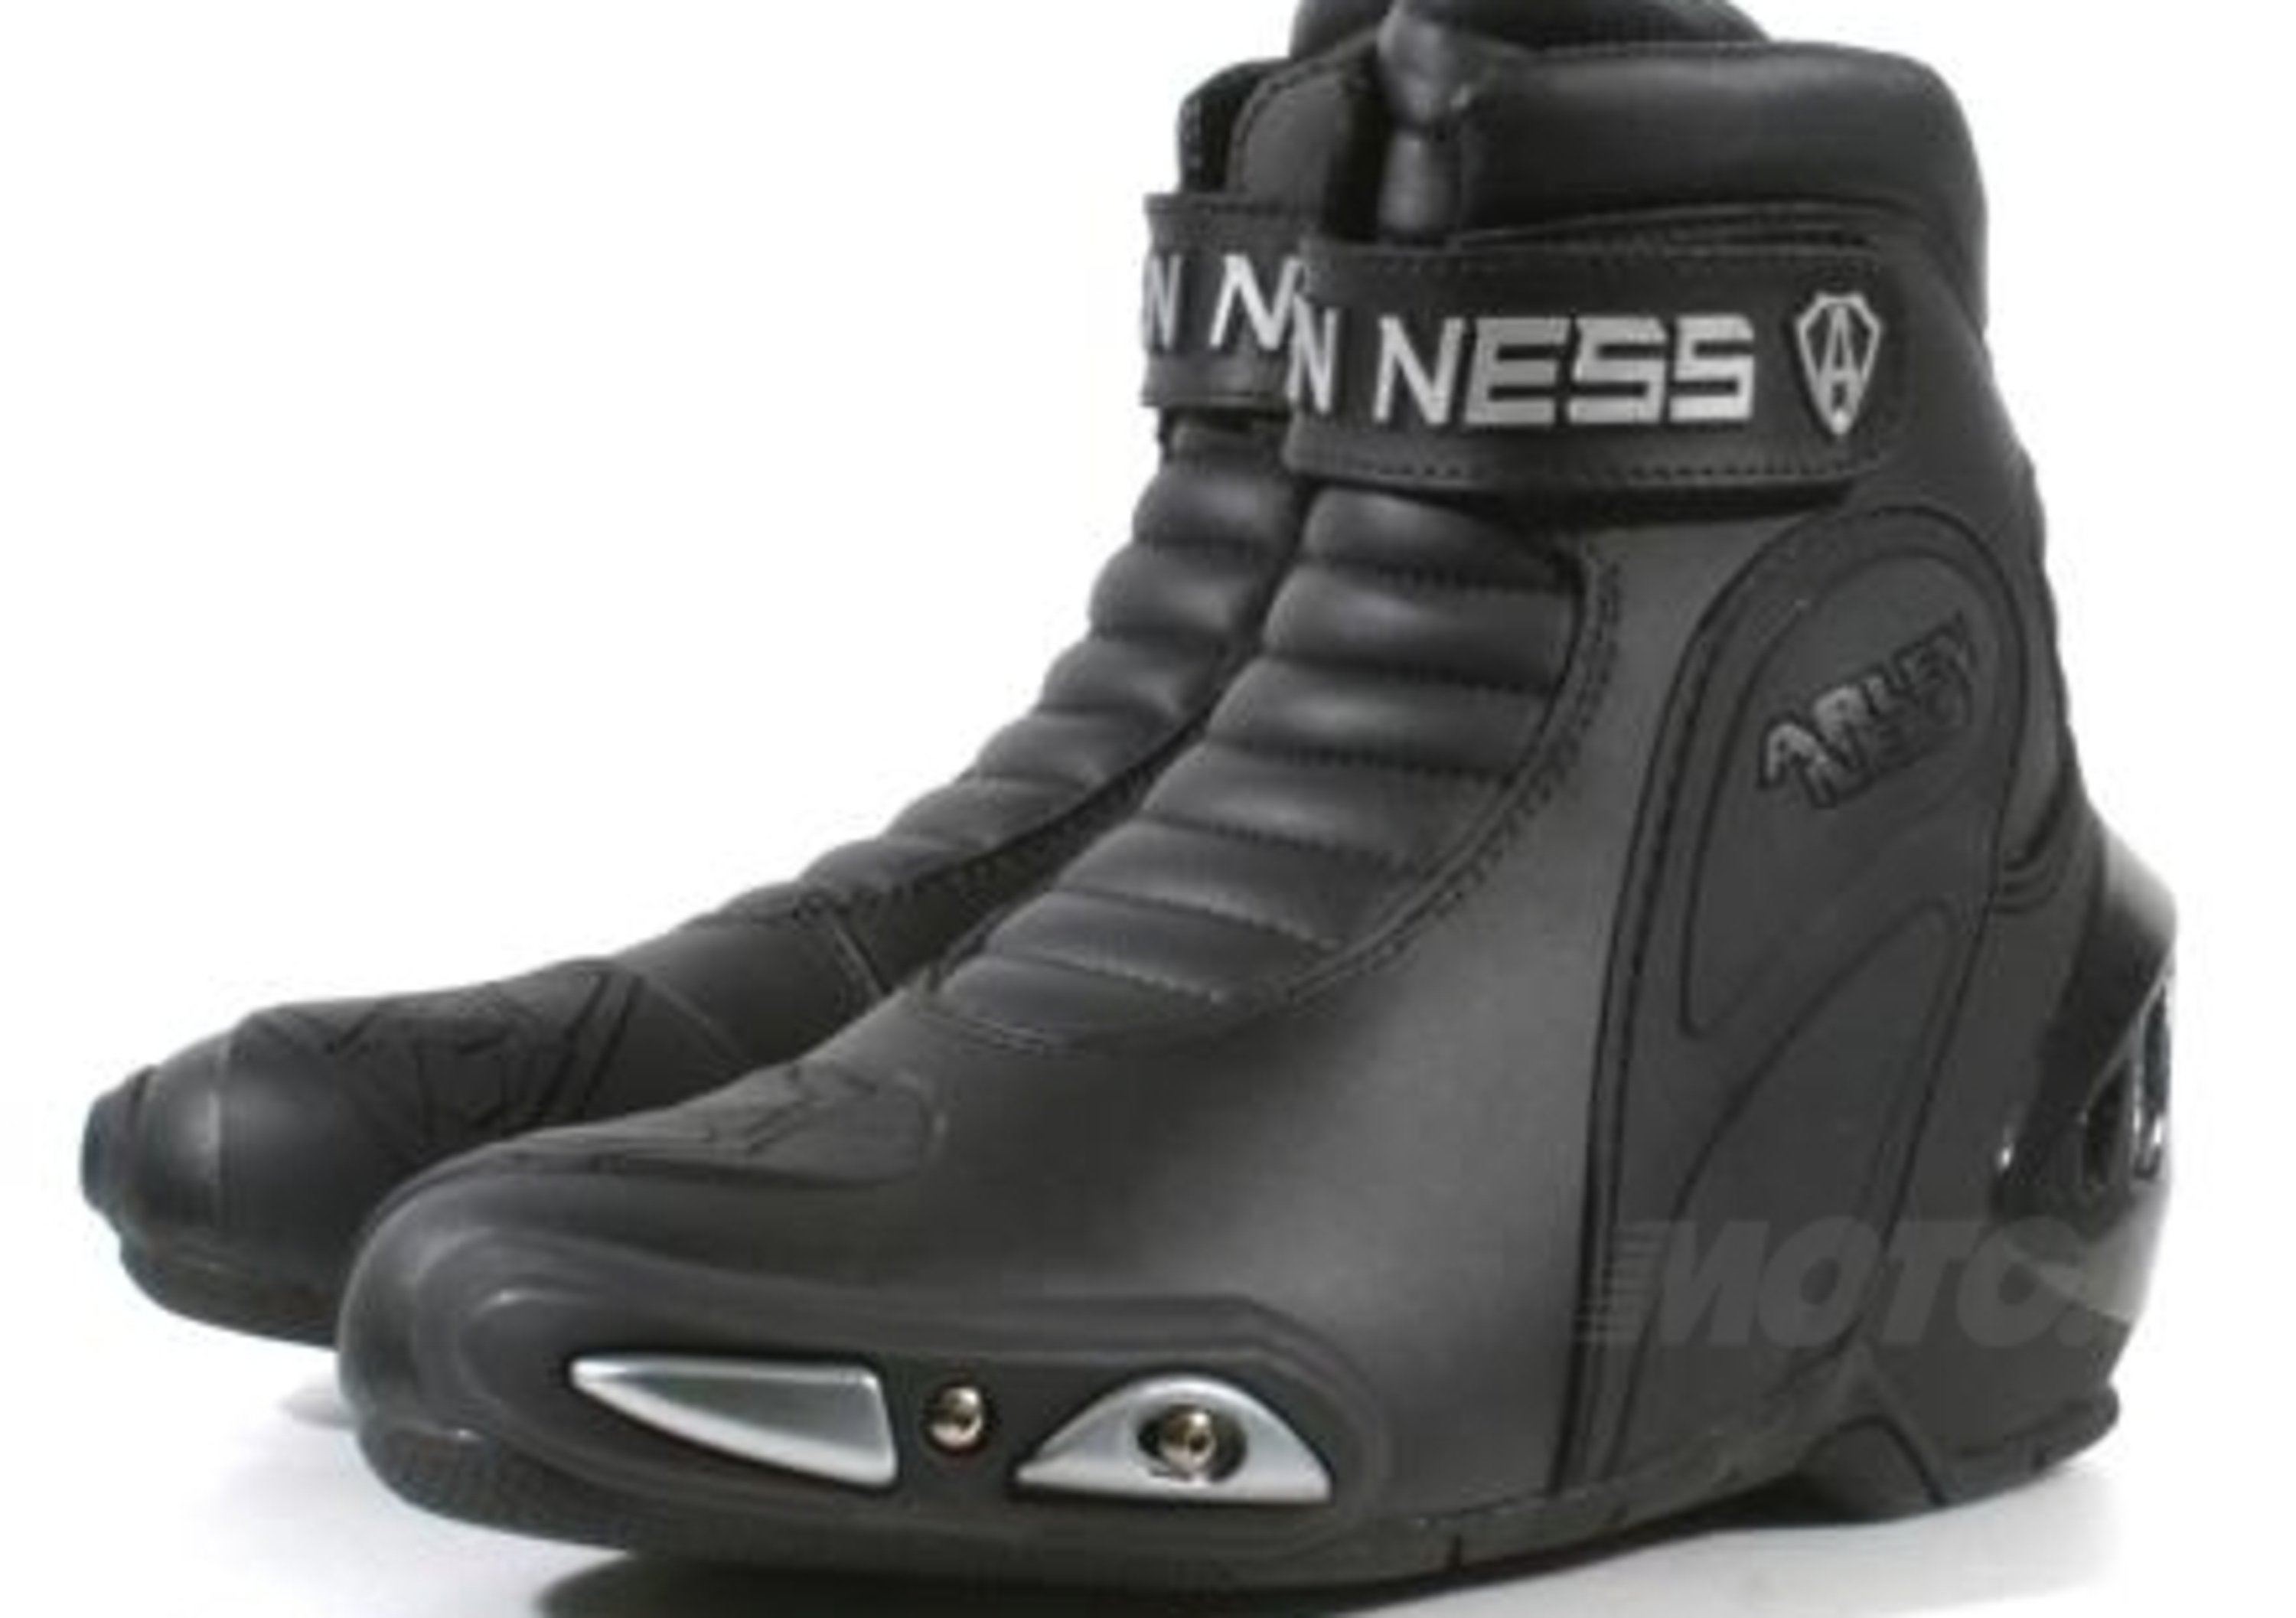 Arlen Ness scarpa BOT-1226-AN